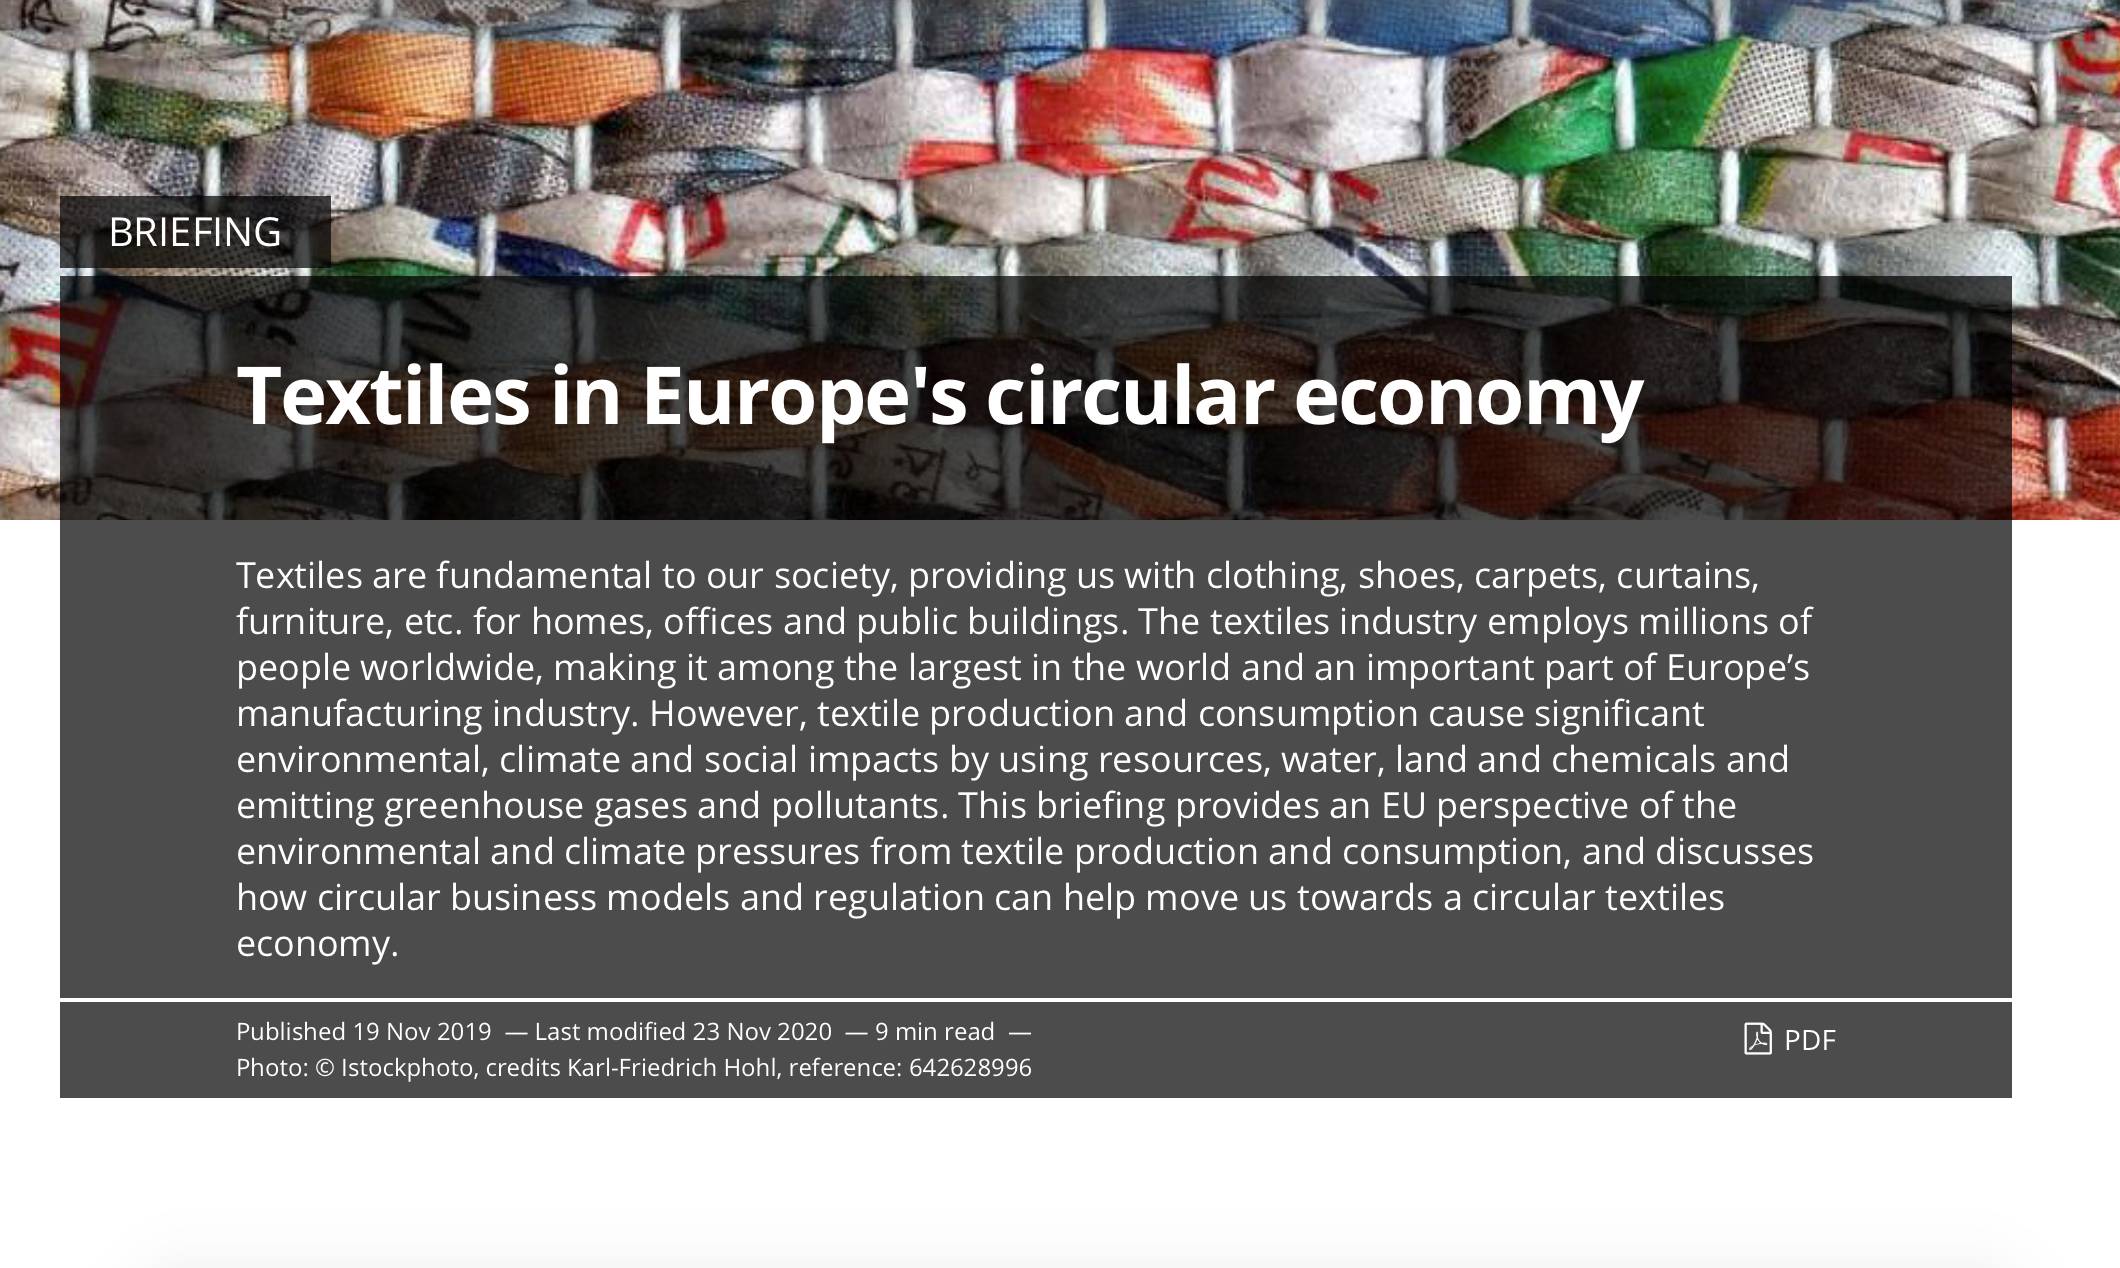 Textiles in Europe's Circular Economy